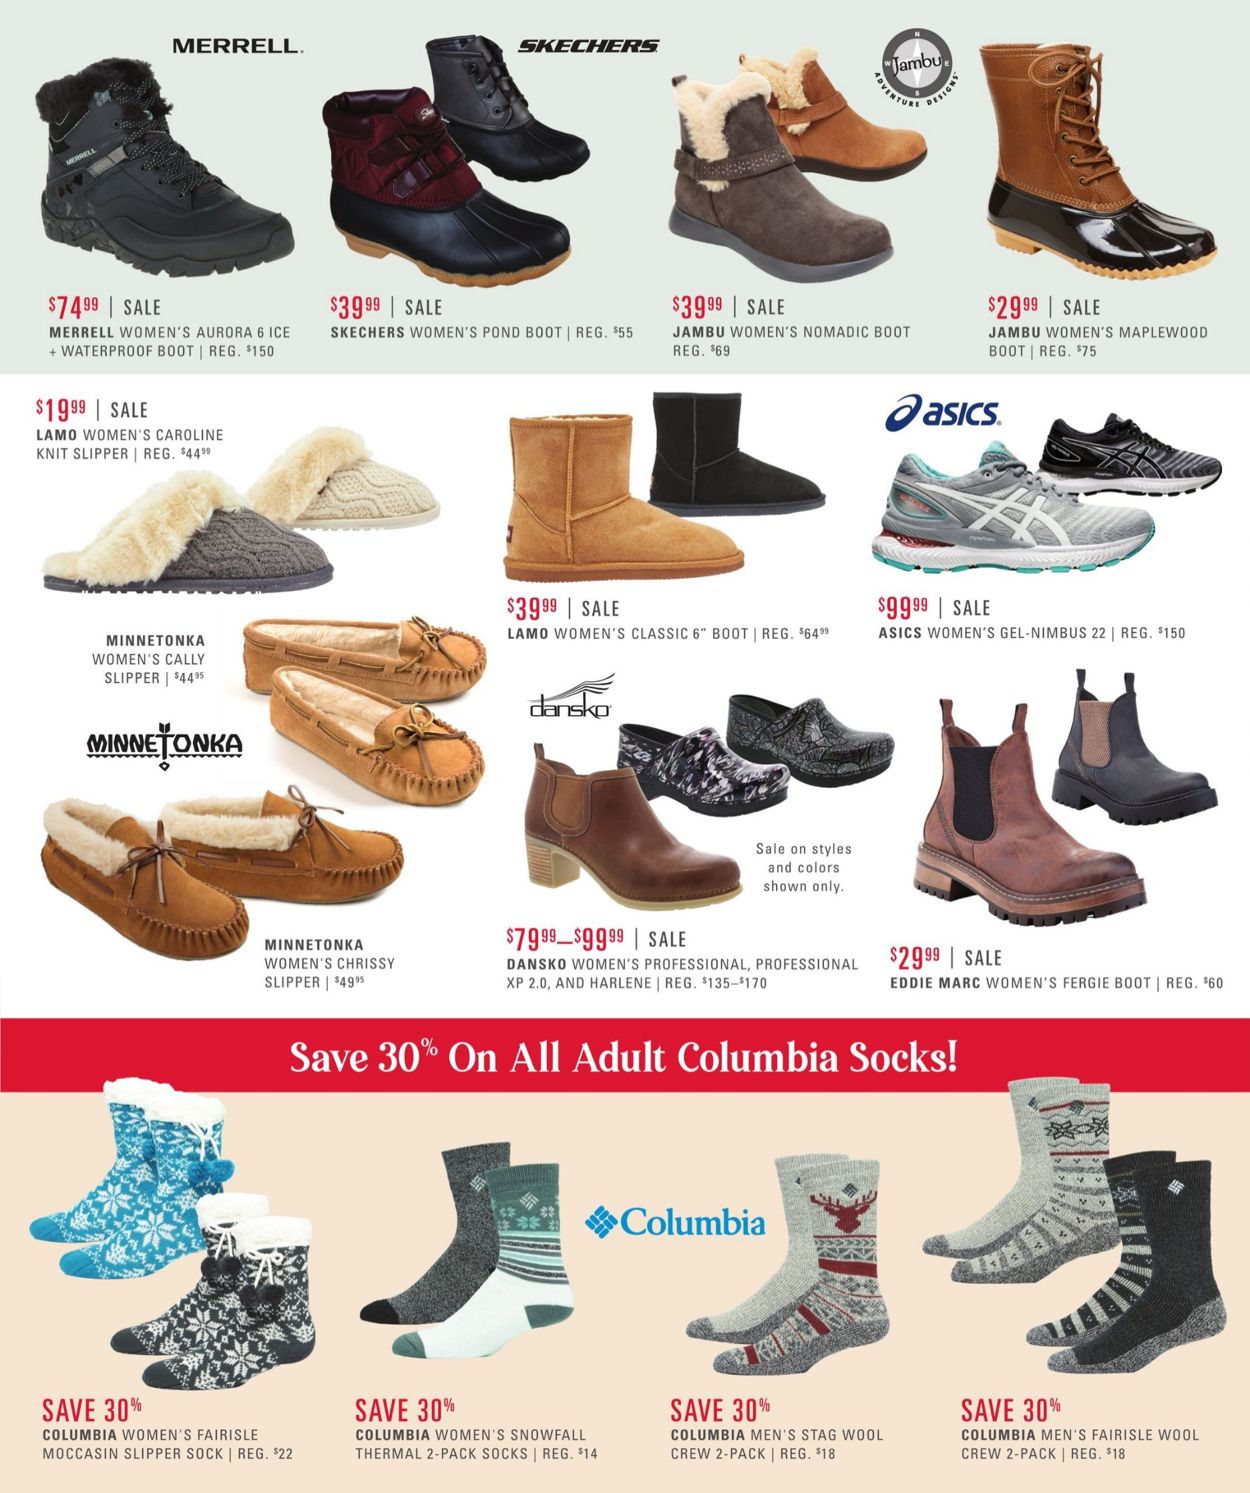 Catalogue Scheels Sale 2020 from 12/12/2020